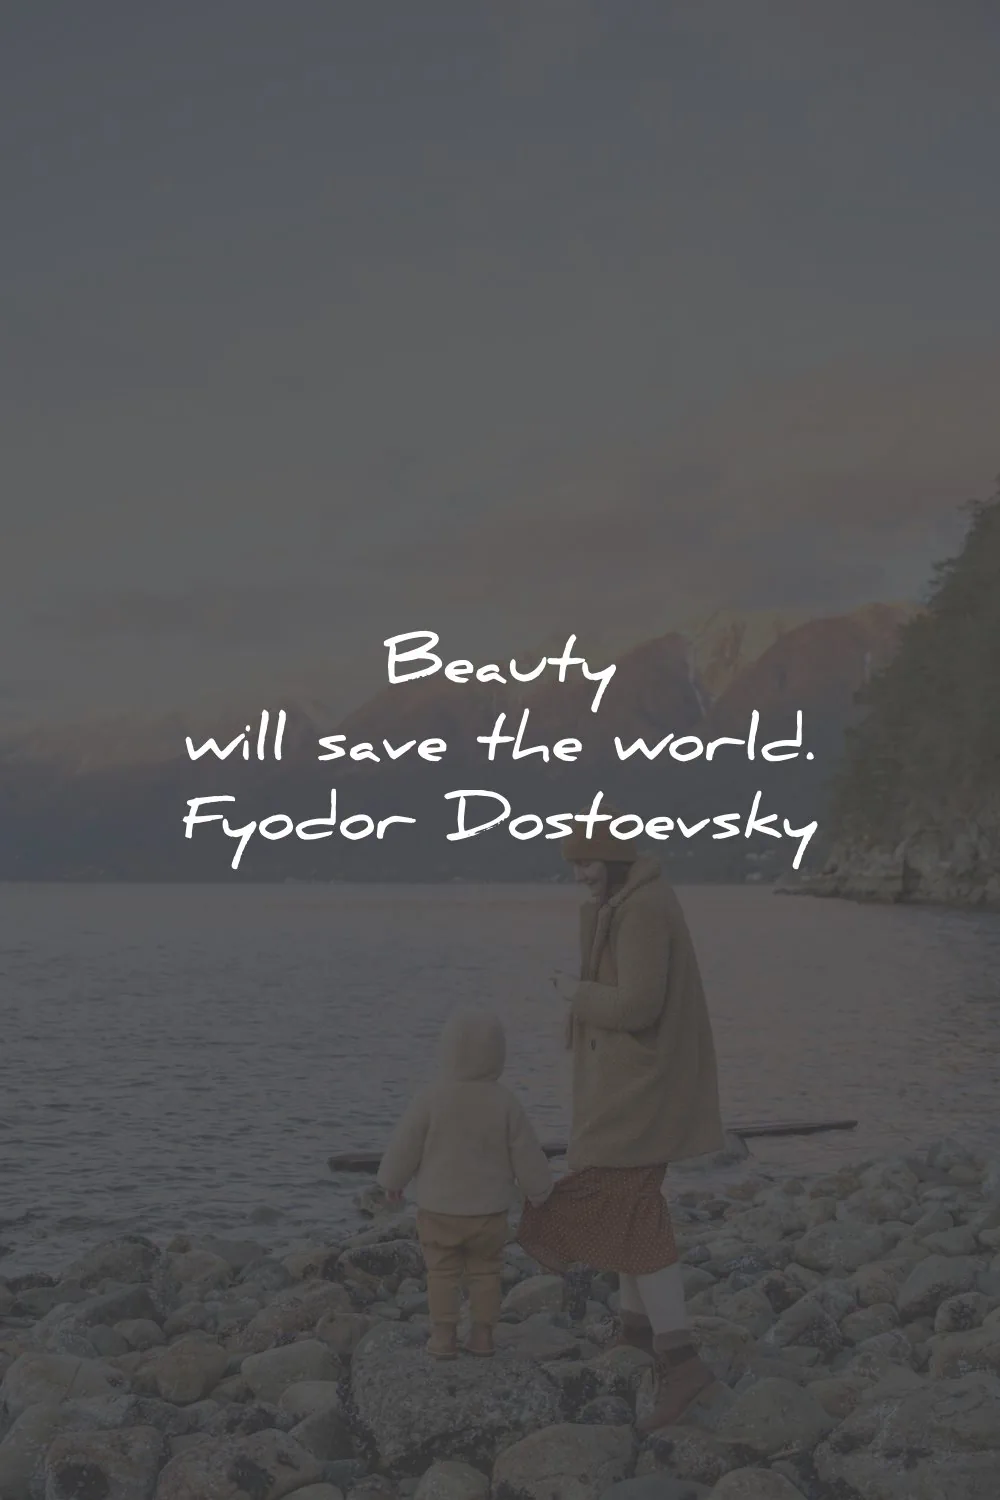 fyodor dostoevsky quotes beauty save world wisdom